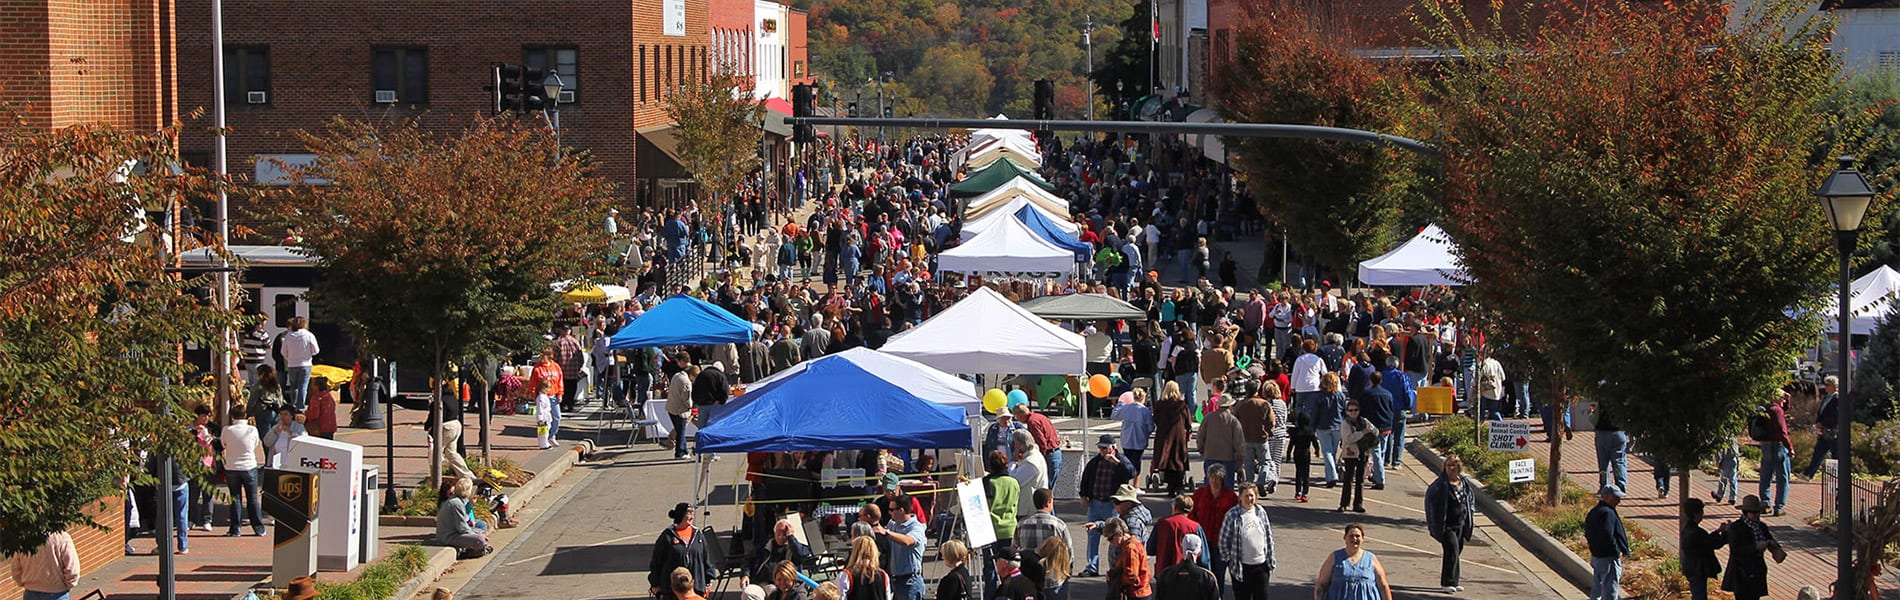 town of franklin north carolina festivals events